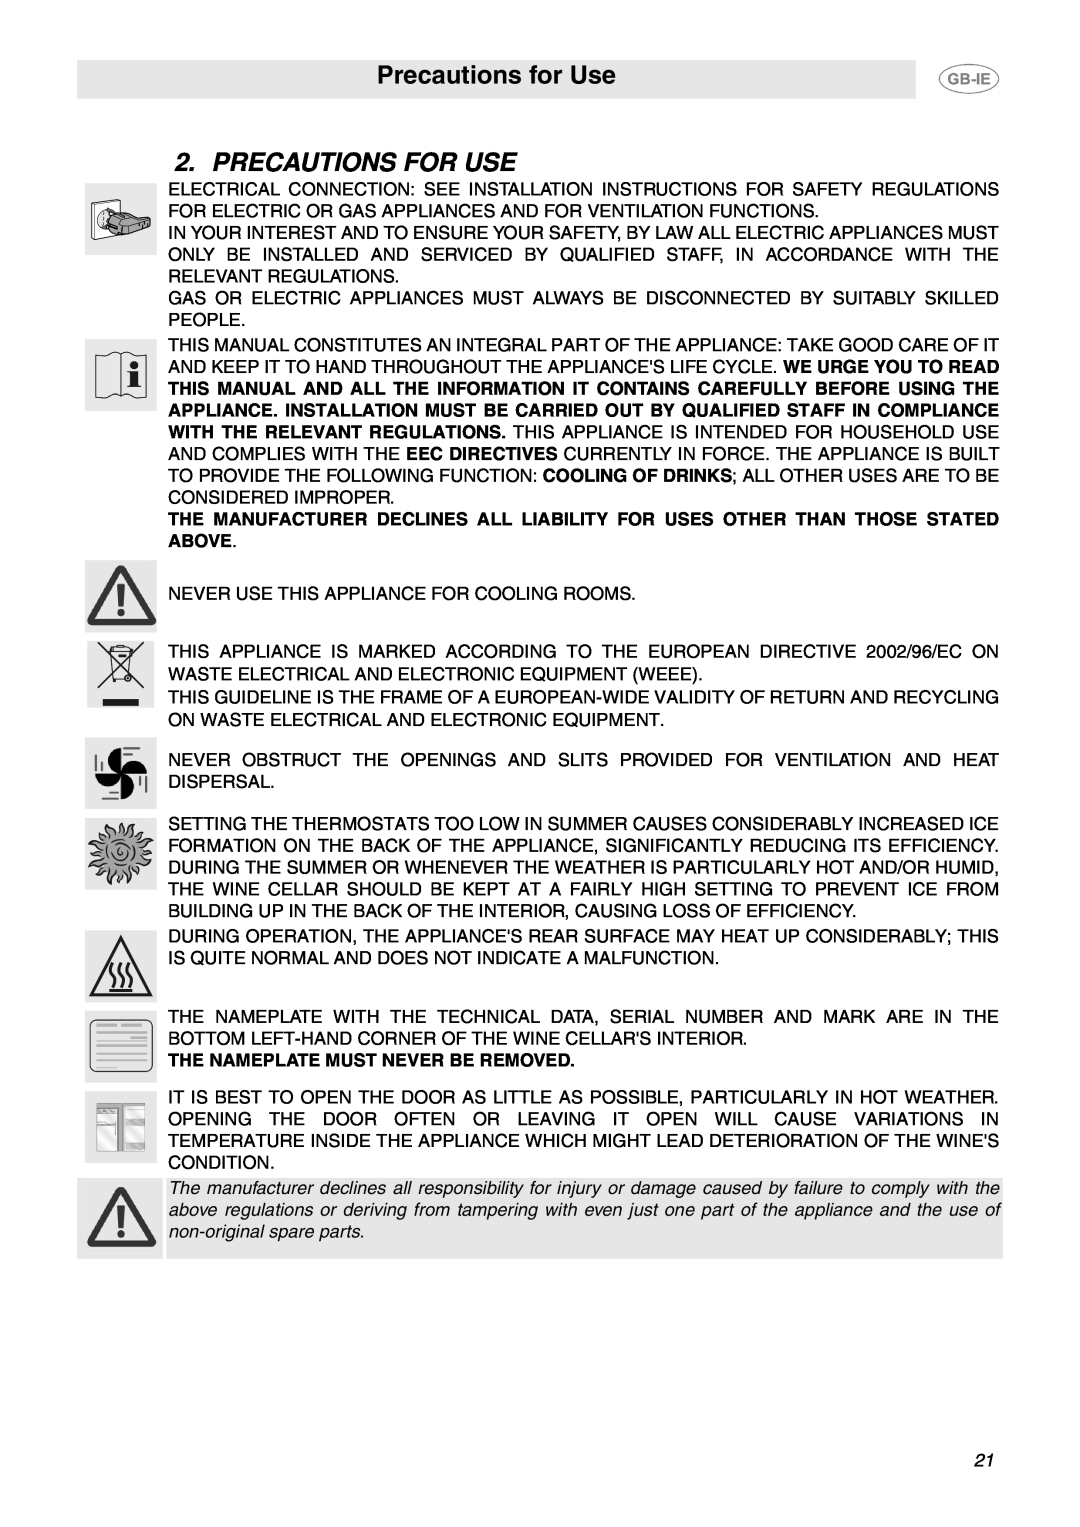 Smeg SCV36XS dimensions Precautions for Use, Precautions For Use 